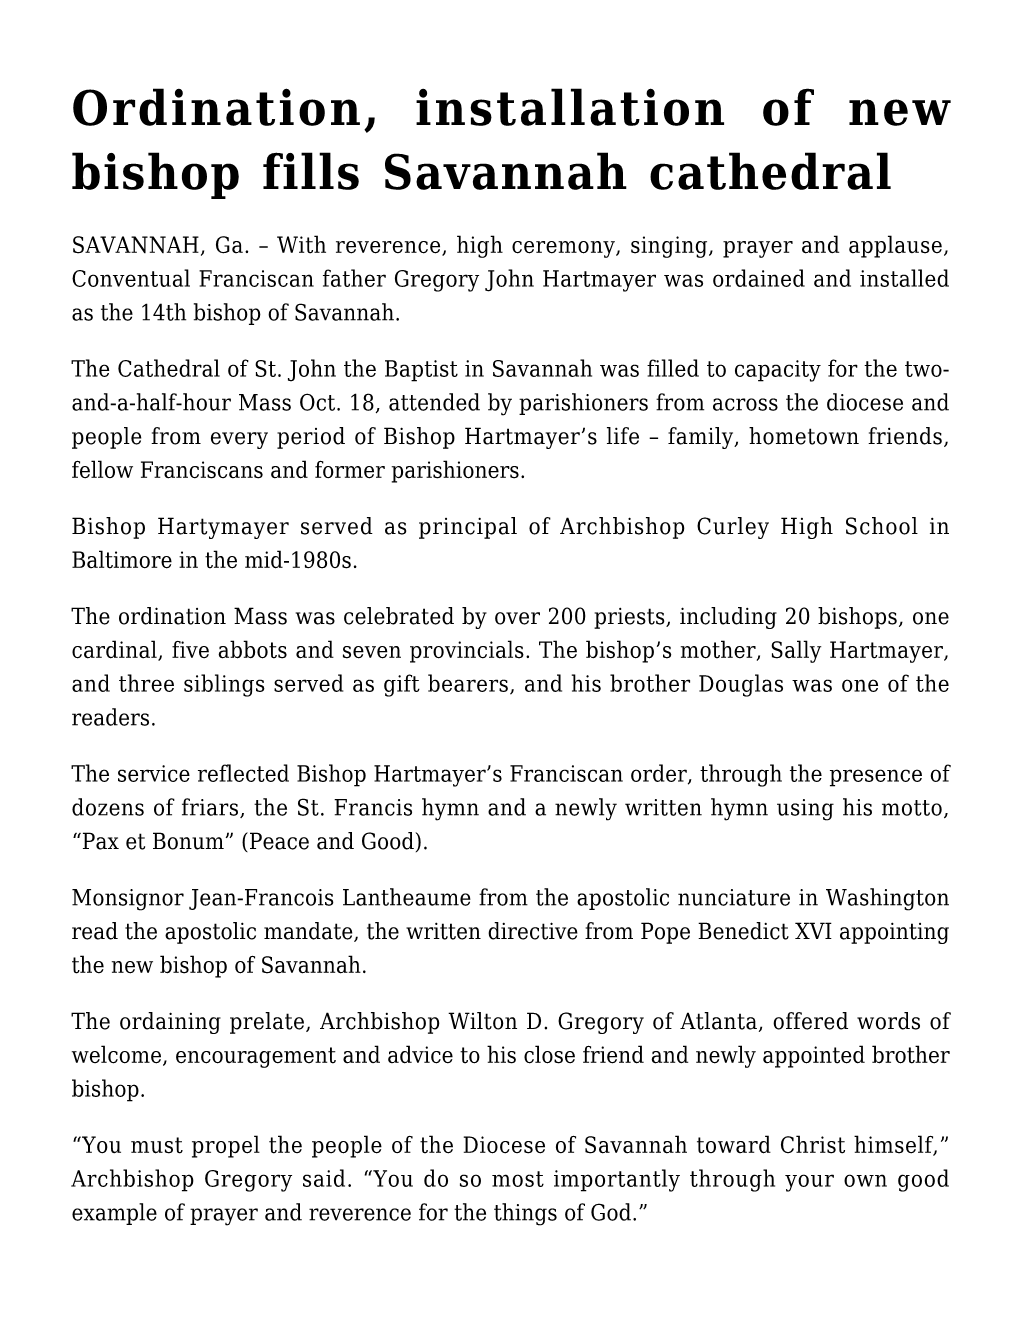 Ordination, Installation of New Bishop Fills Savannah Cathedral